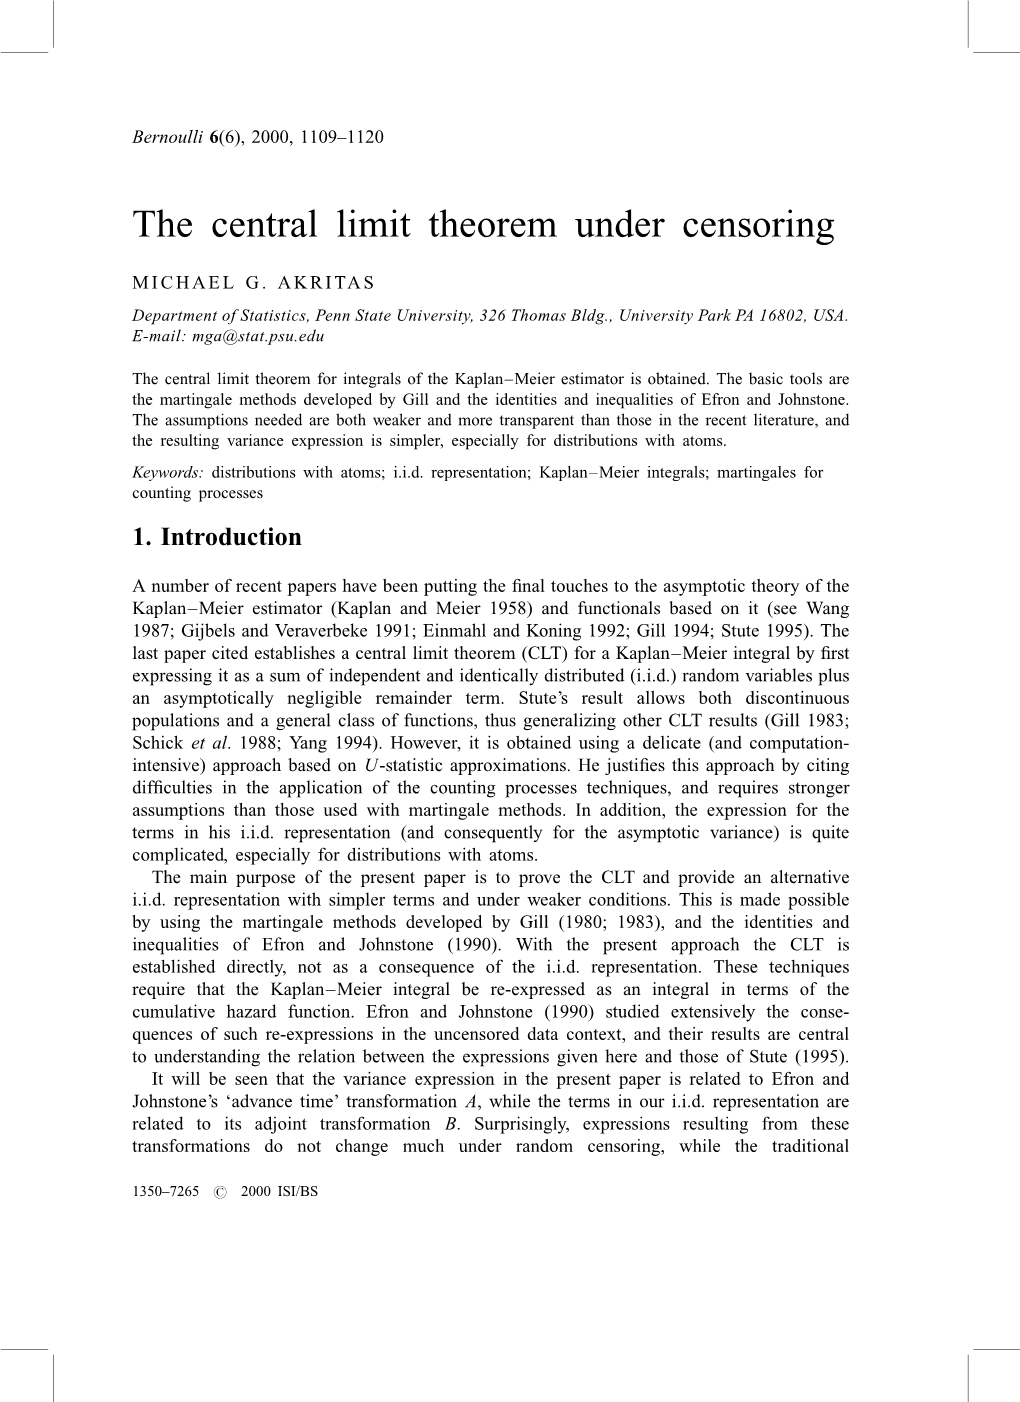 The Central Limit Theorem Under Censoring